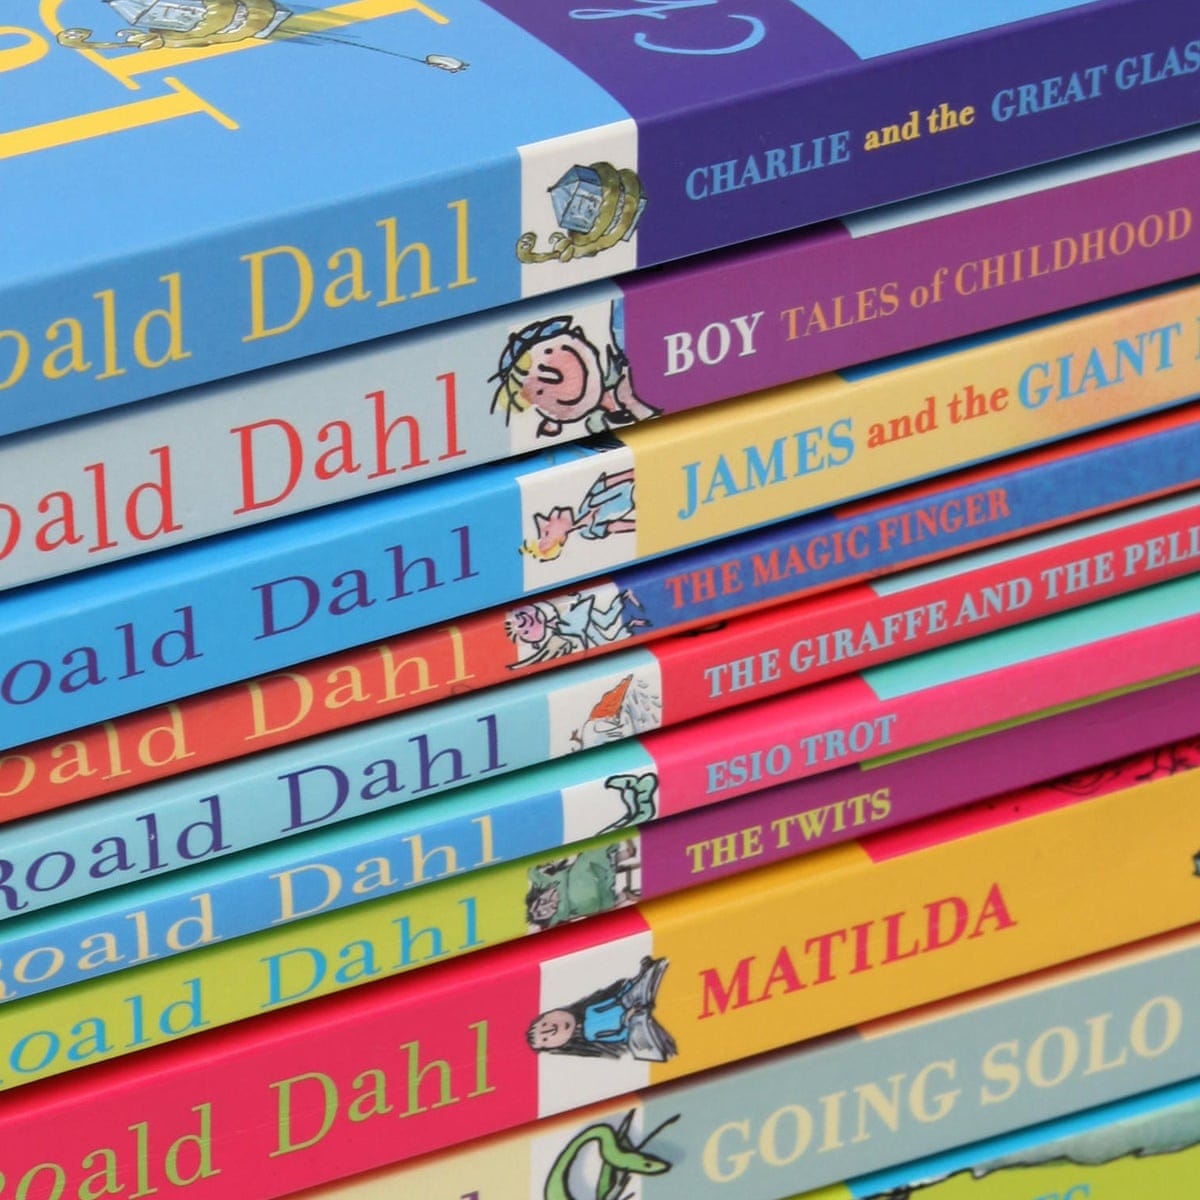 Roald Dahl rewrites: edited language in books criticised as 'absurd  censorship' | Roald Dahl | The Guardian